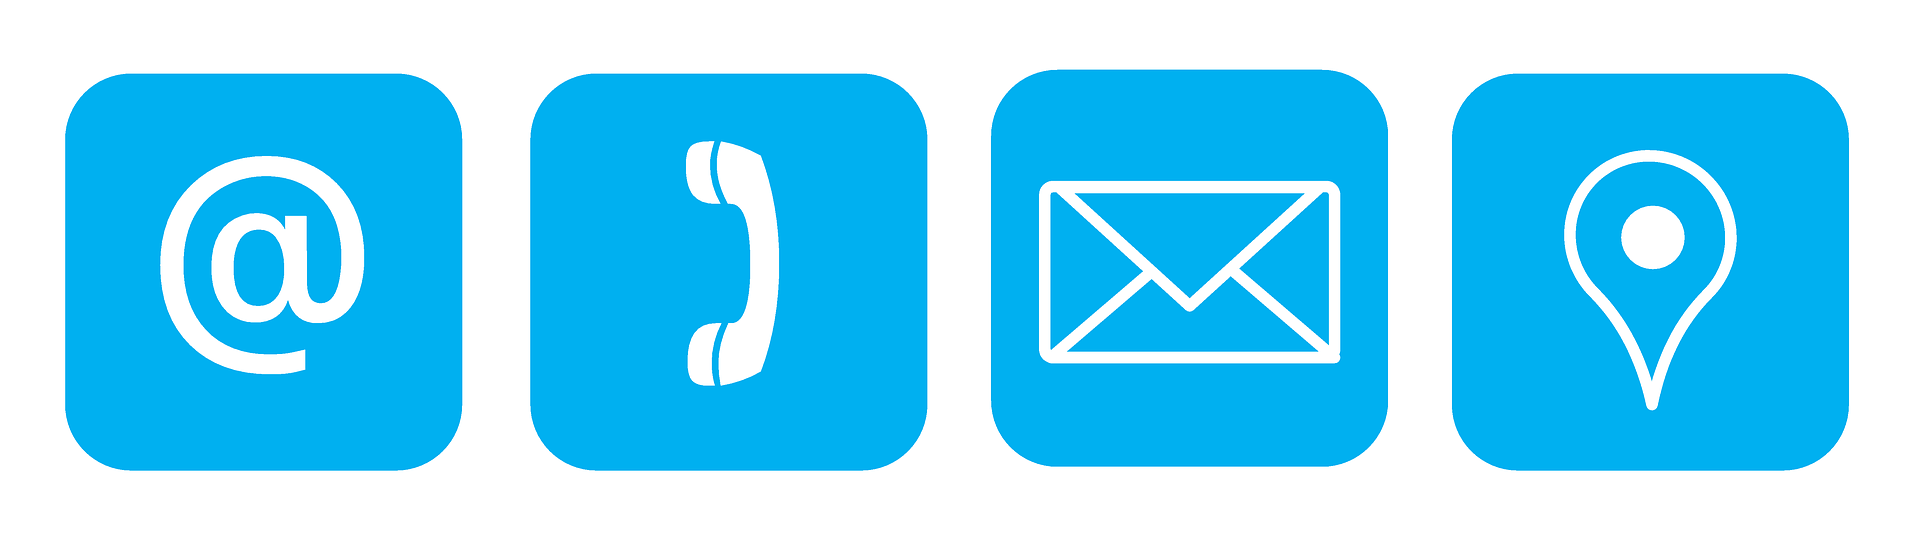 ikony e-maila, telefonu, poczty i lokalizacji 